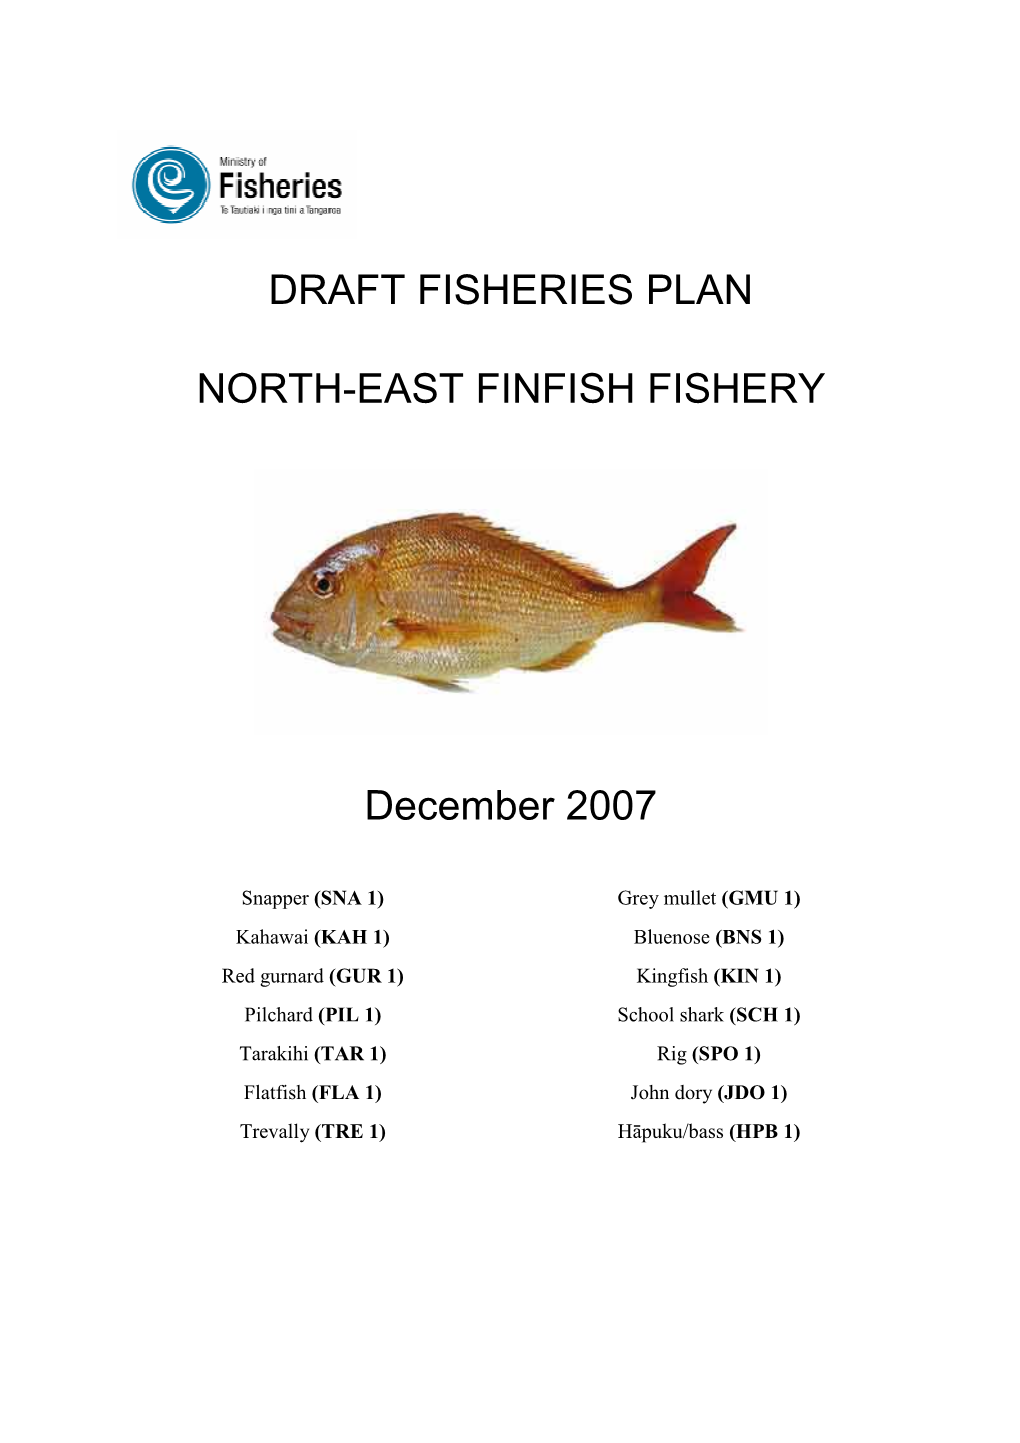 Draft Fisheries Plan North-East Finfish Fishery